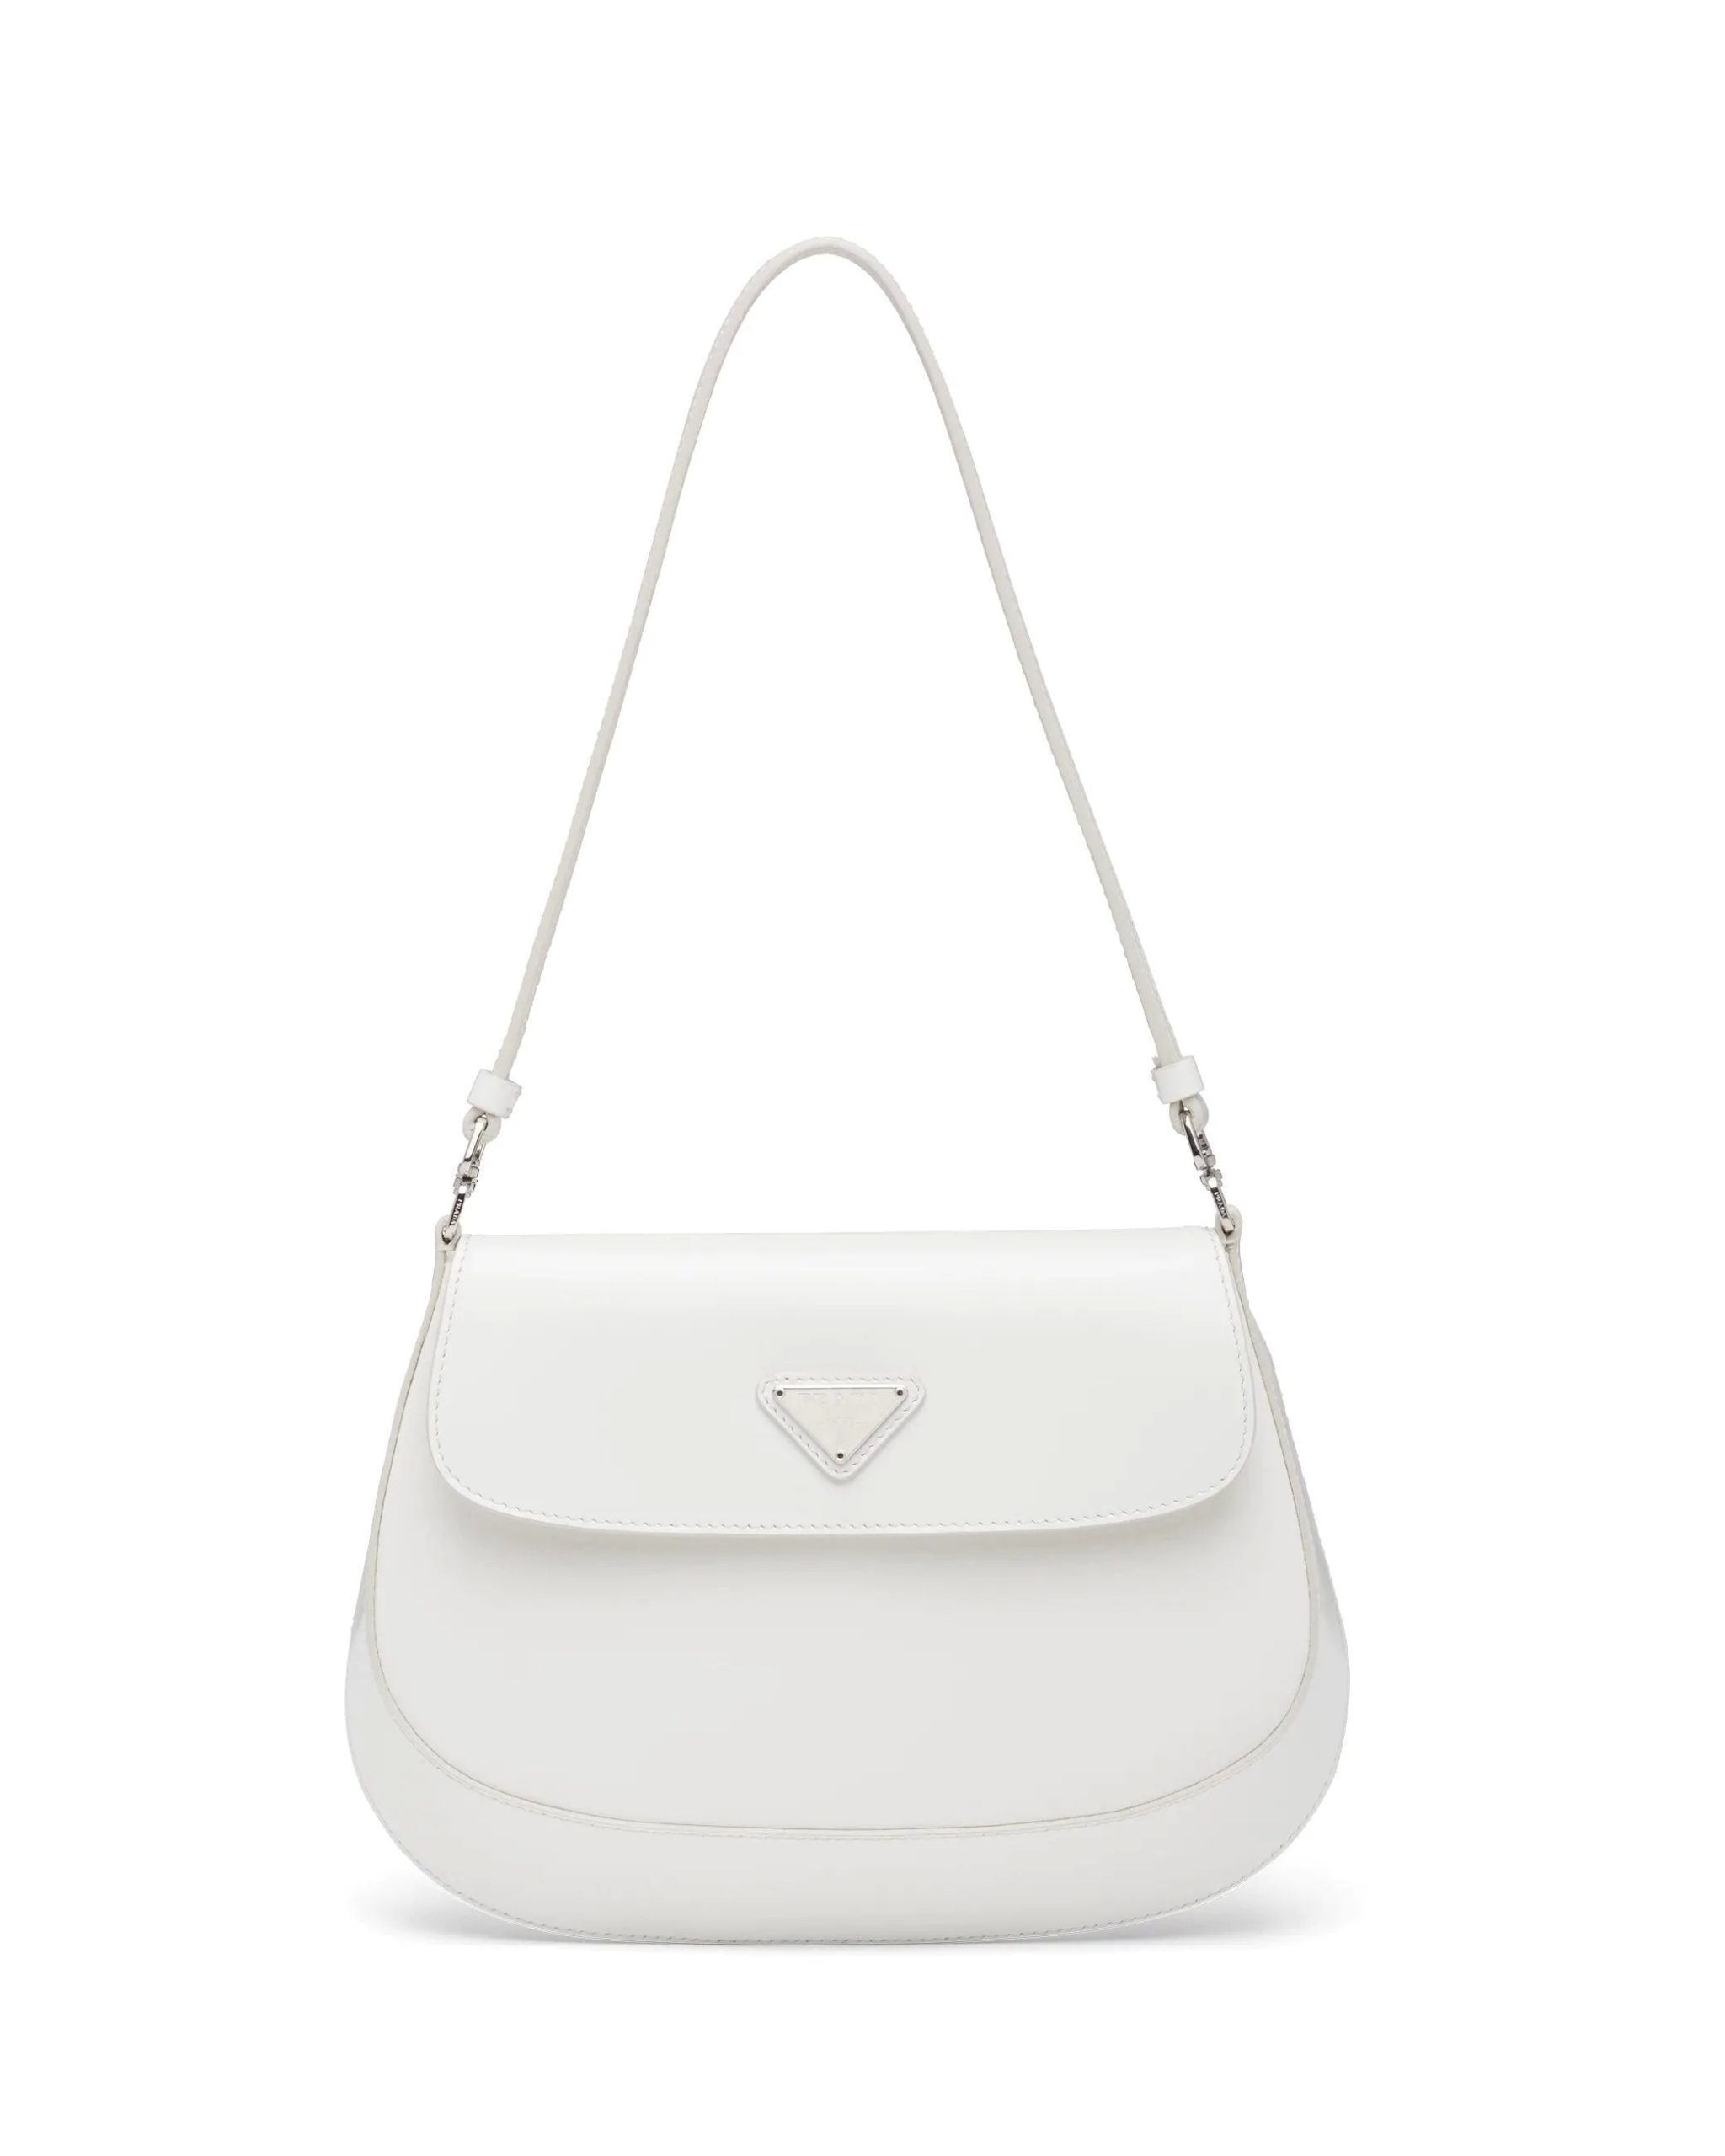 Prada Cleo Brushed Leather Shoulder Bag With Flap, White